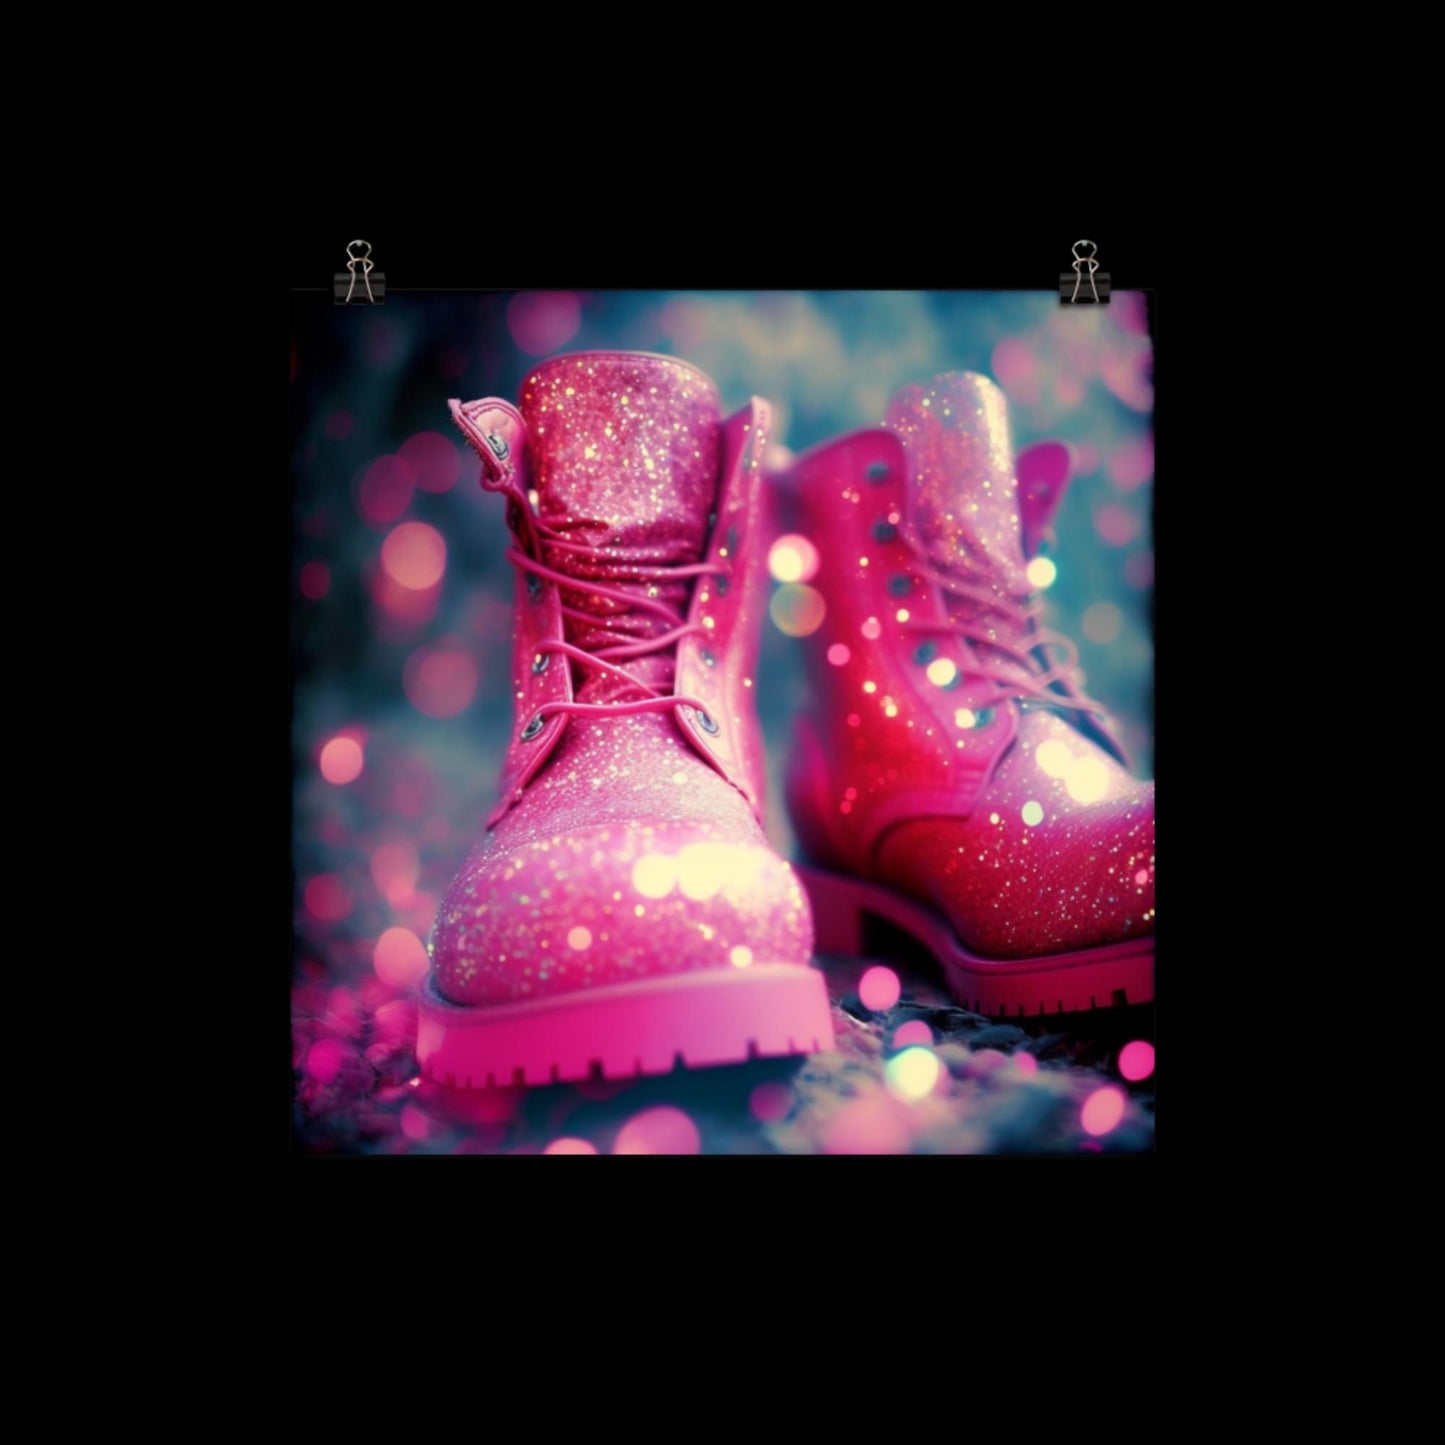 Pink Glitter Boots #4 Poster Print